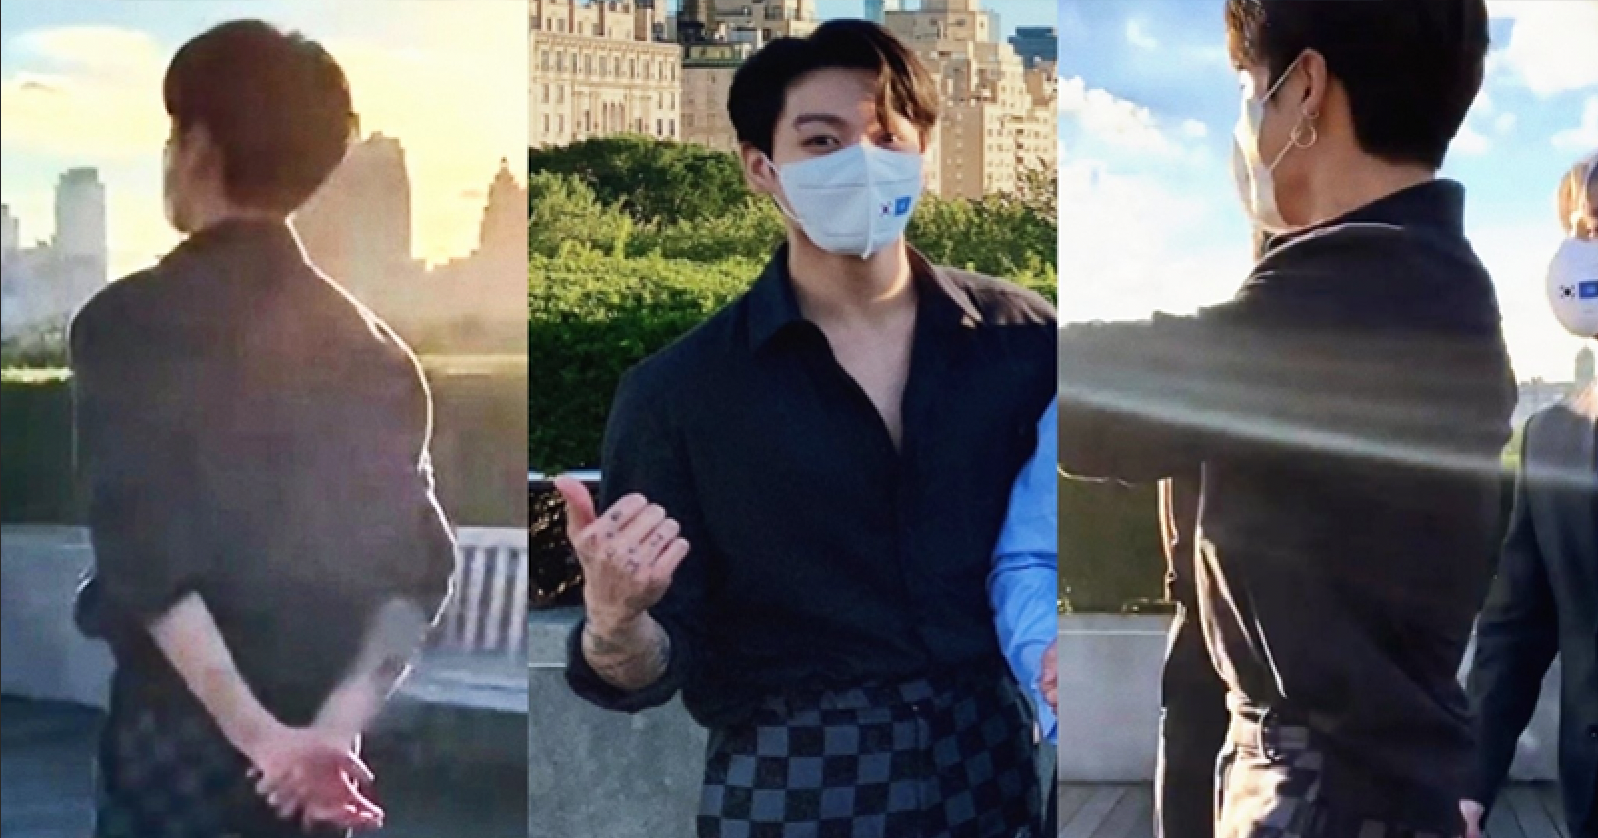 BTS: Jungkook rocks Louis Vuitton's damier cigarette pants like